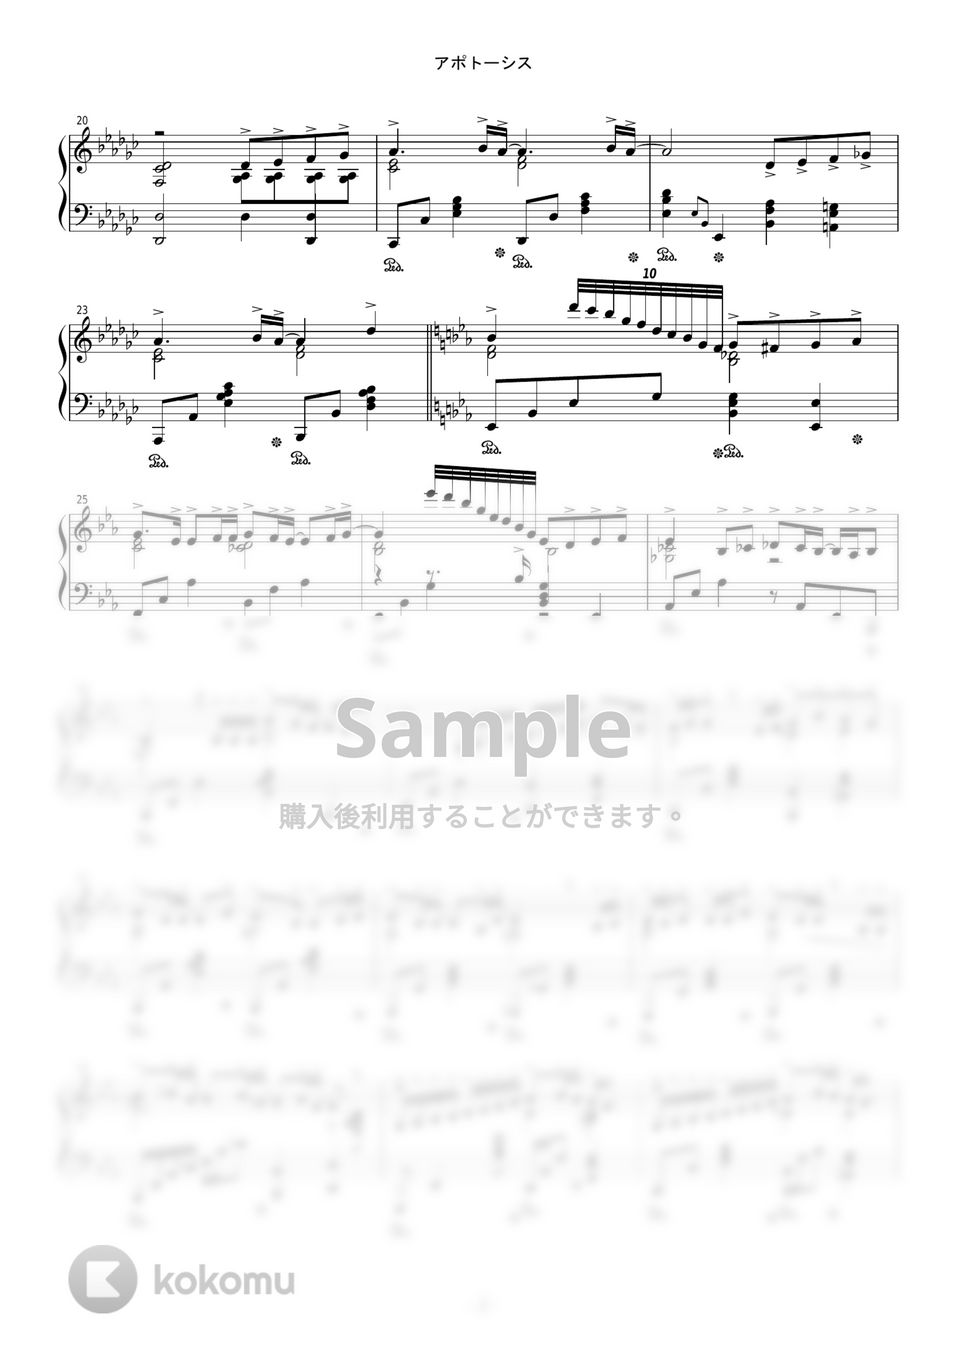 Official髭男dism / 藤原 聡 - アポトーシス by Yuki@ピアノの先生